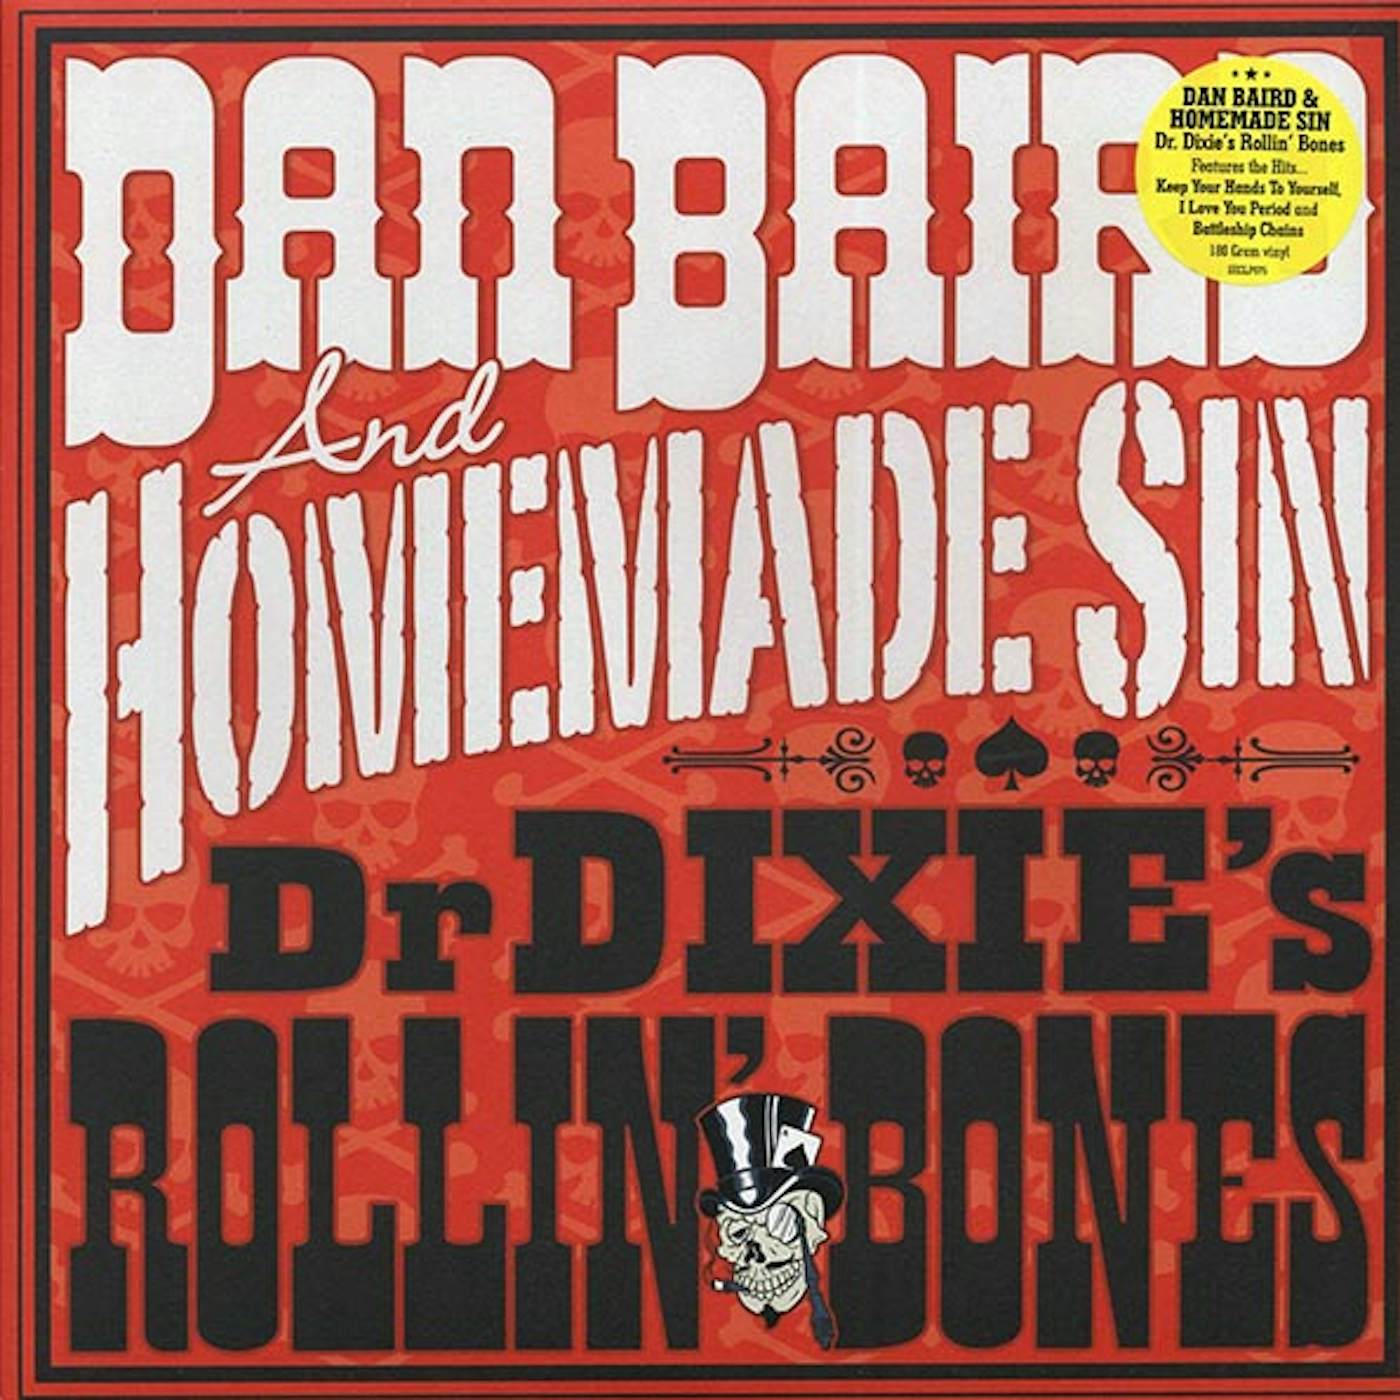 Dan Baird and Homemade Sin  LP -  Dr. Dixie's Rollin' Bones (180g) (Vinyl)